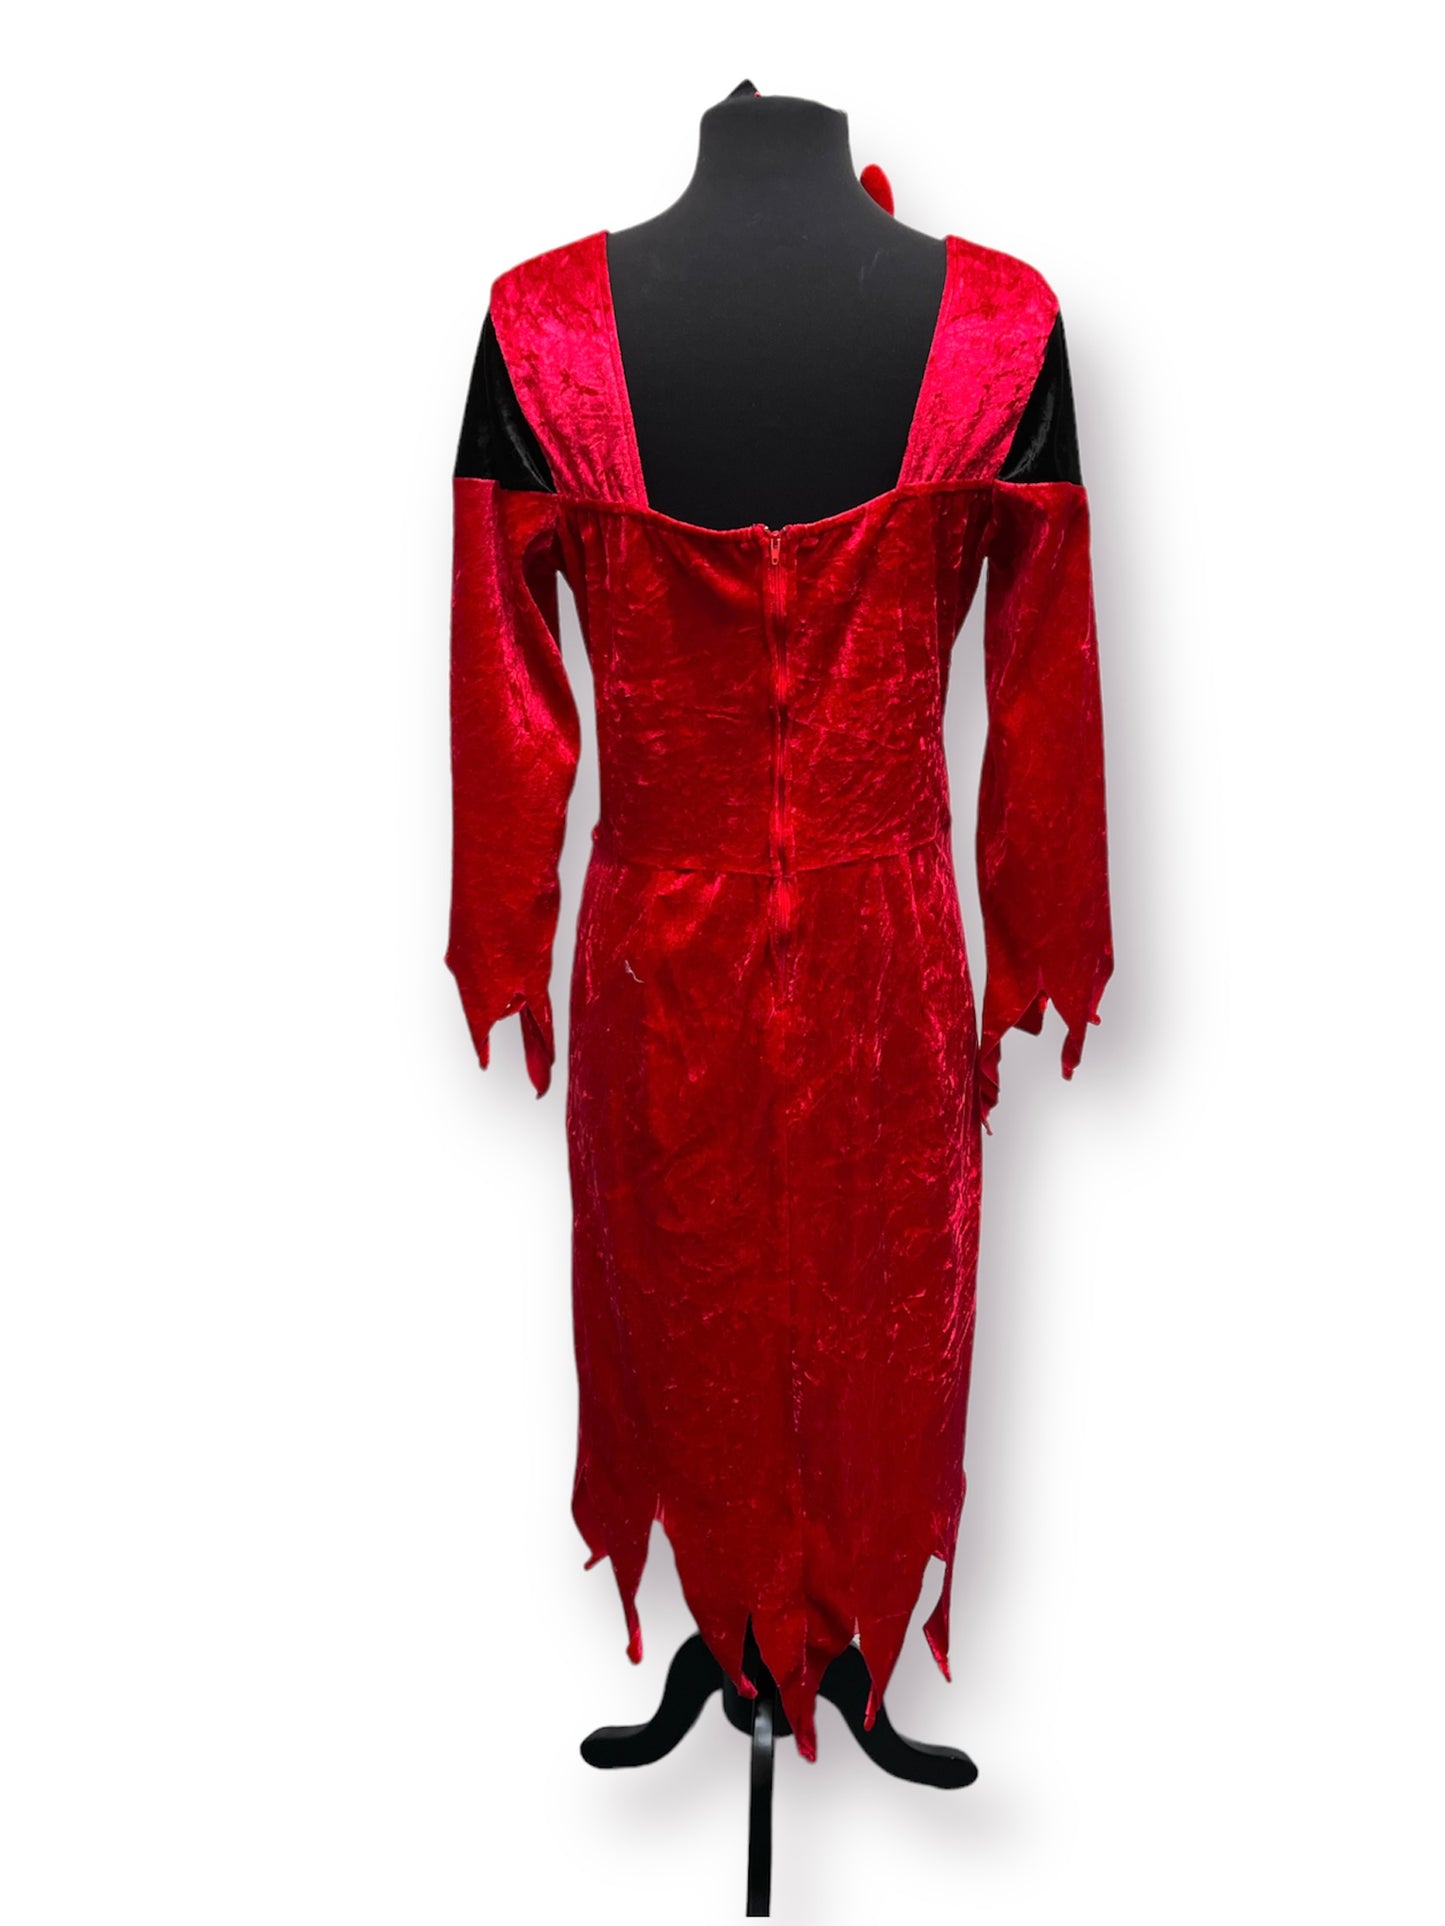 Halloween Red Black Velour Devil Dress with Horns - Ex Hire Fancy Dress Costume